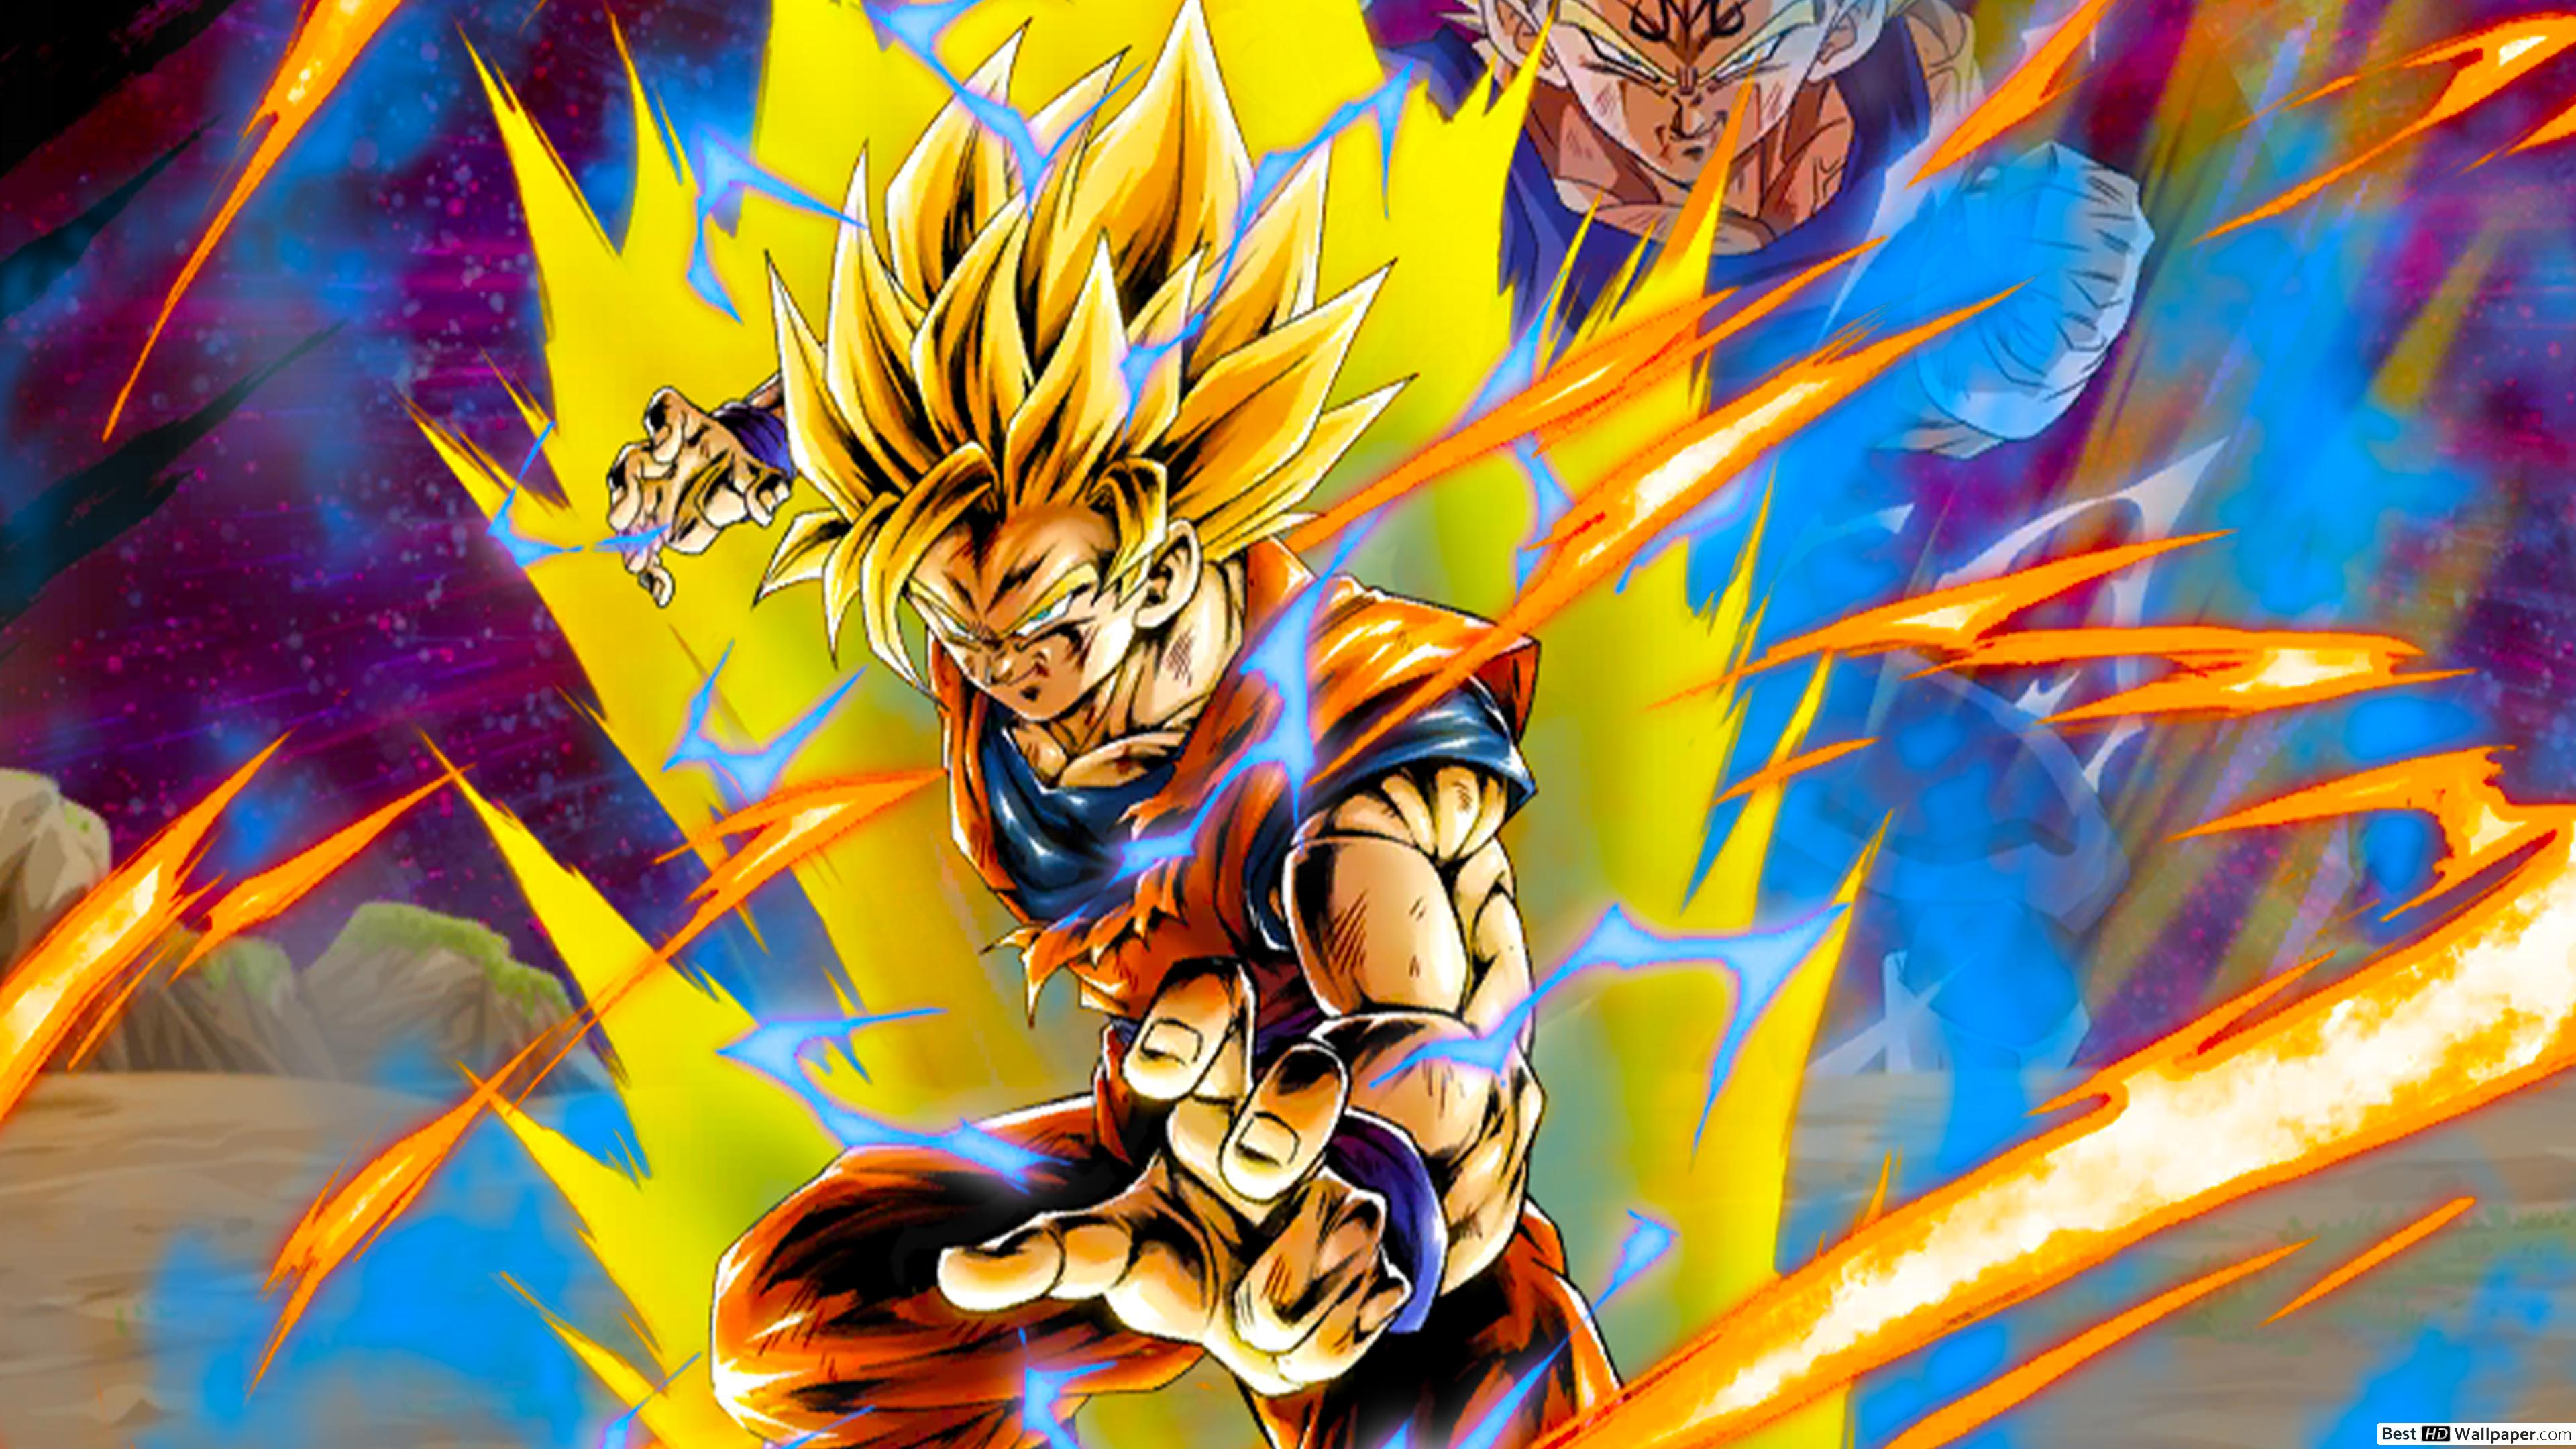 Super Saiyan 2 Goku from Dragon Ball Z [Dragon Ball Legends Arts] for Desktop HD wallpapers download